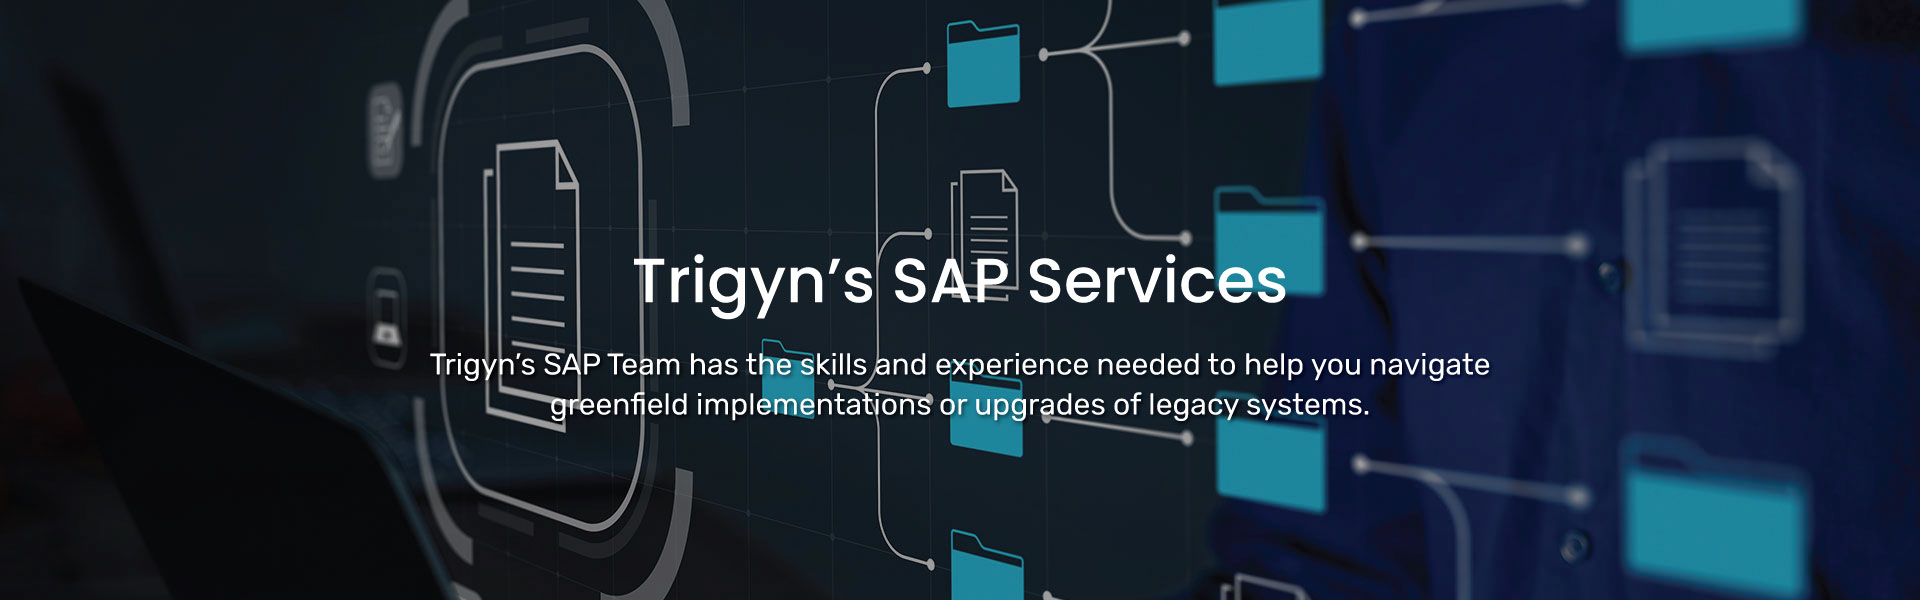 Trigyn’s SAP Services